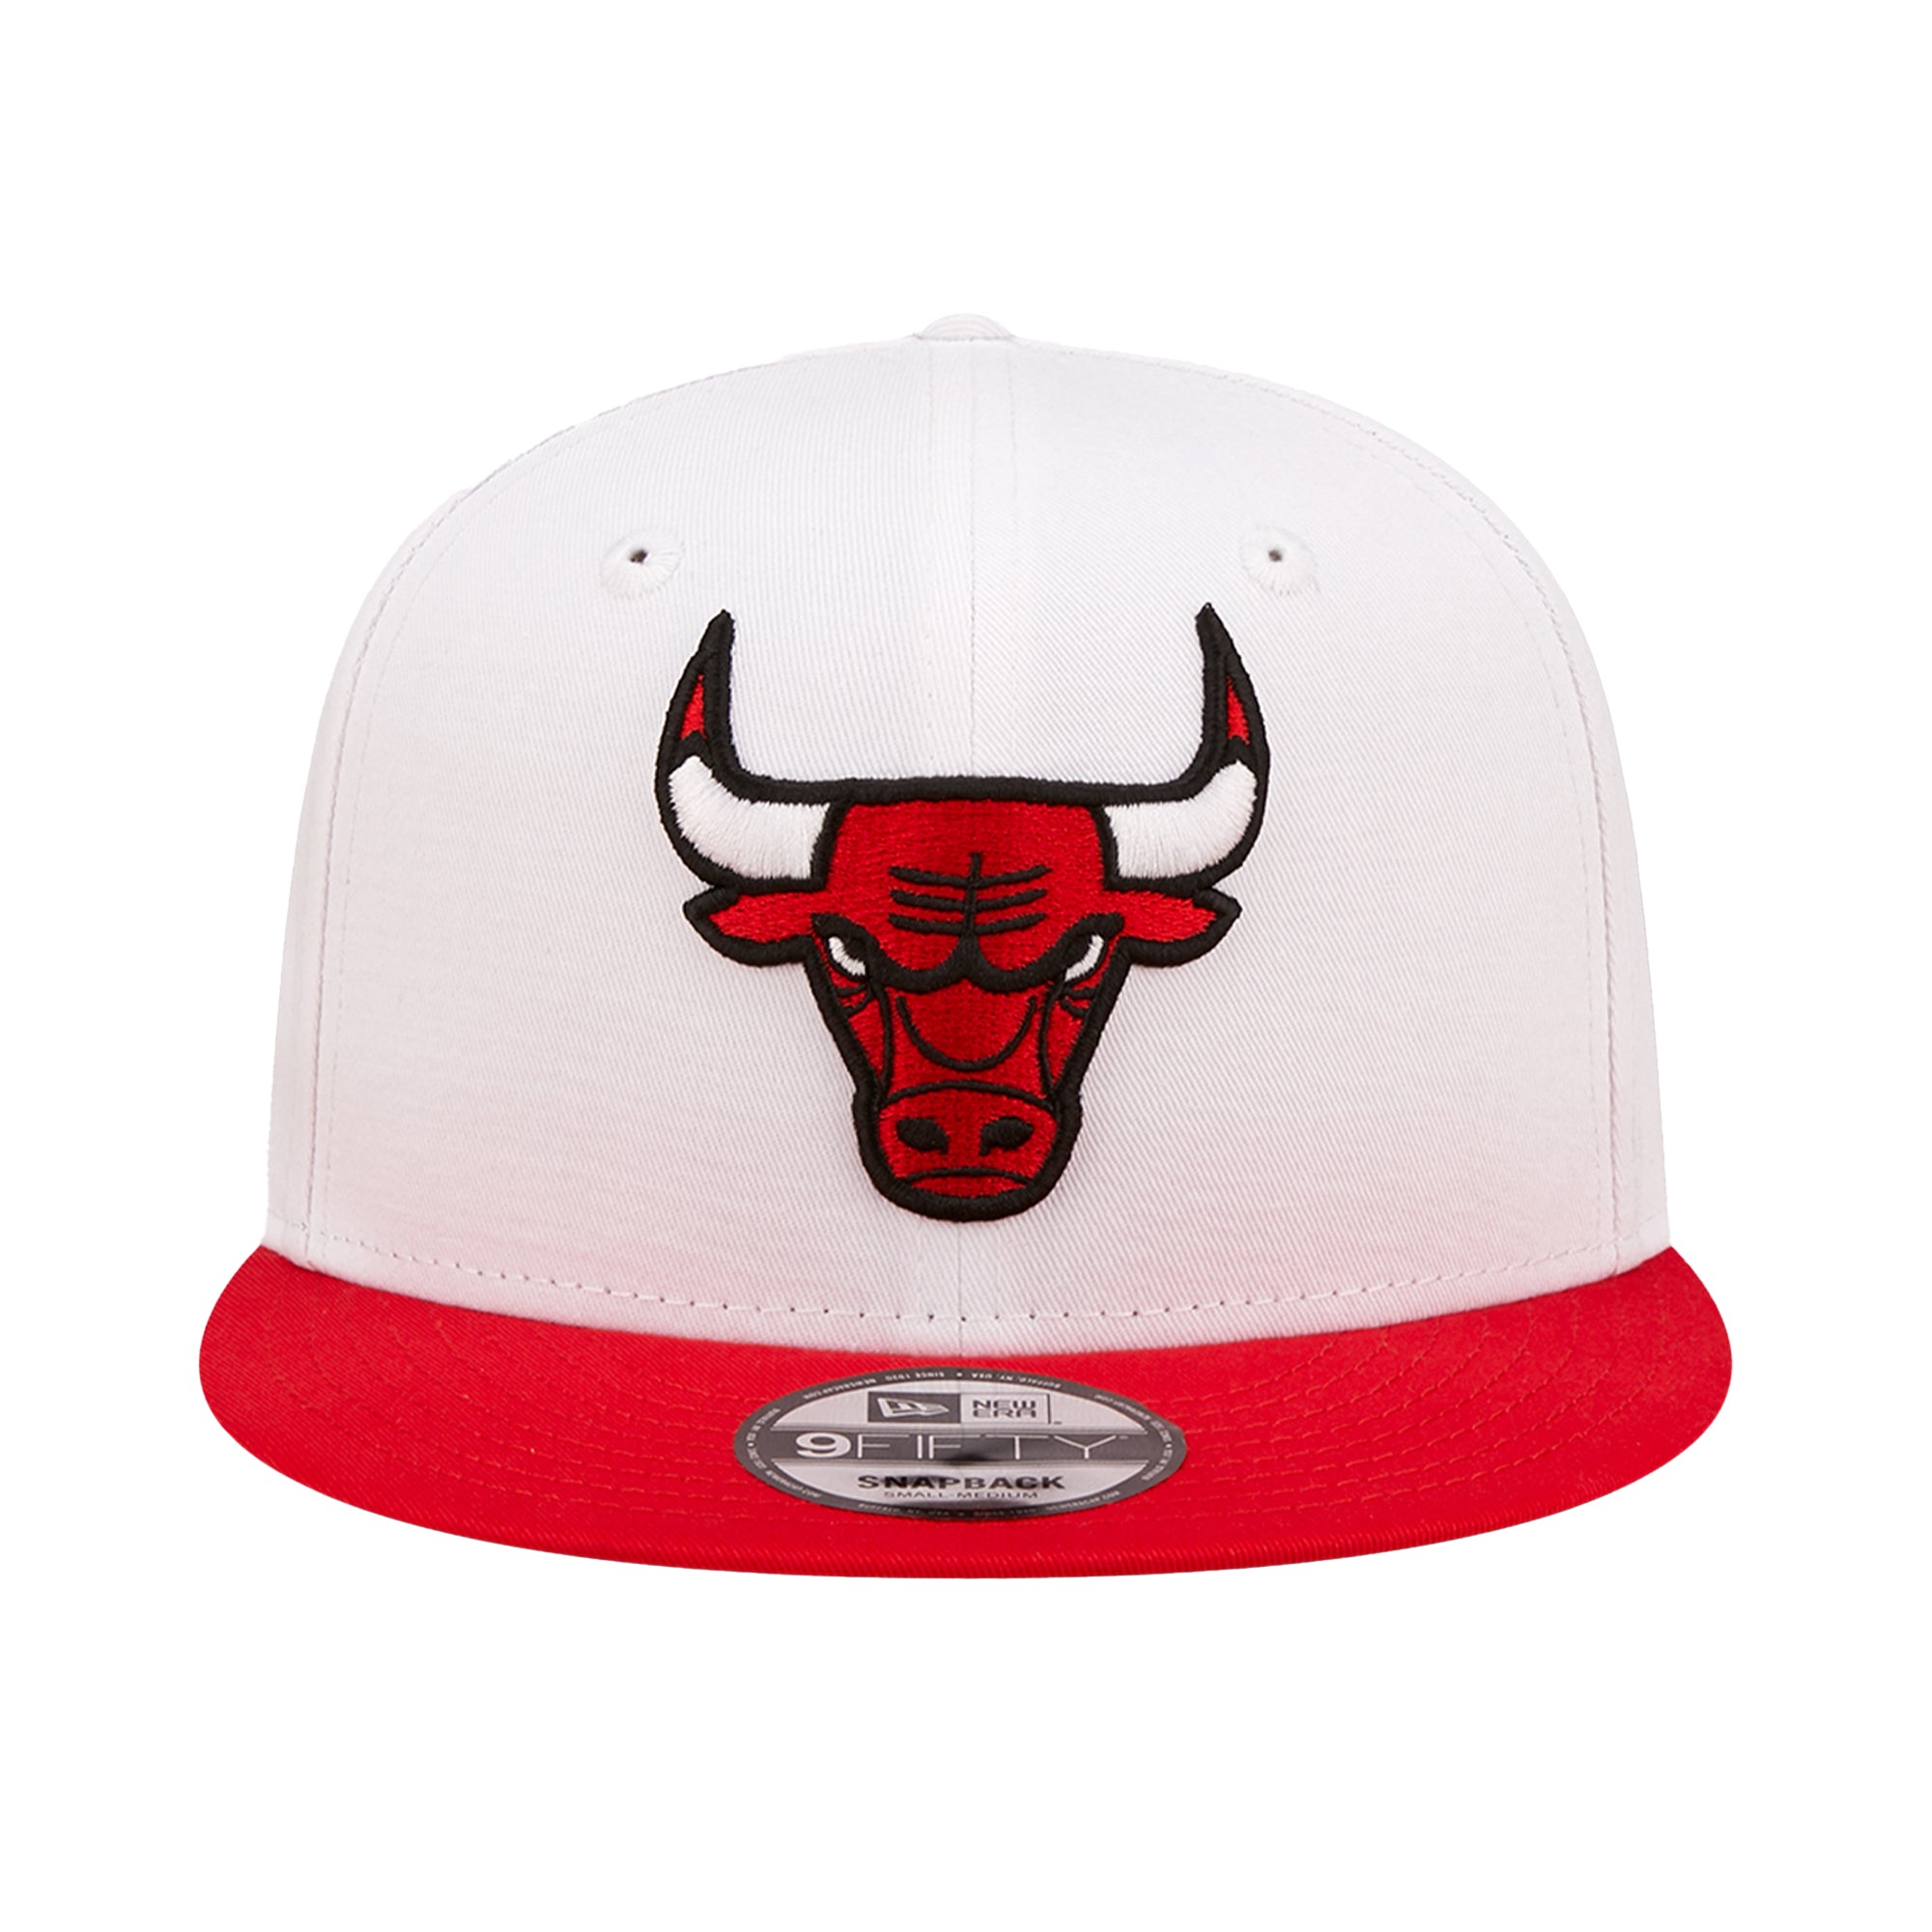 Chicago Bulls White Crown Team White 9FIFTY Snapback